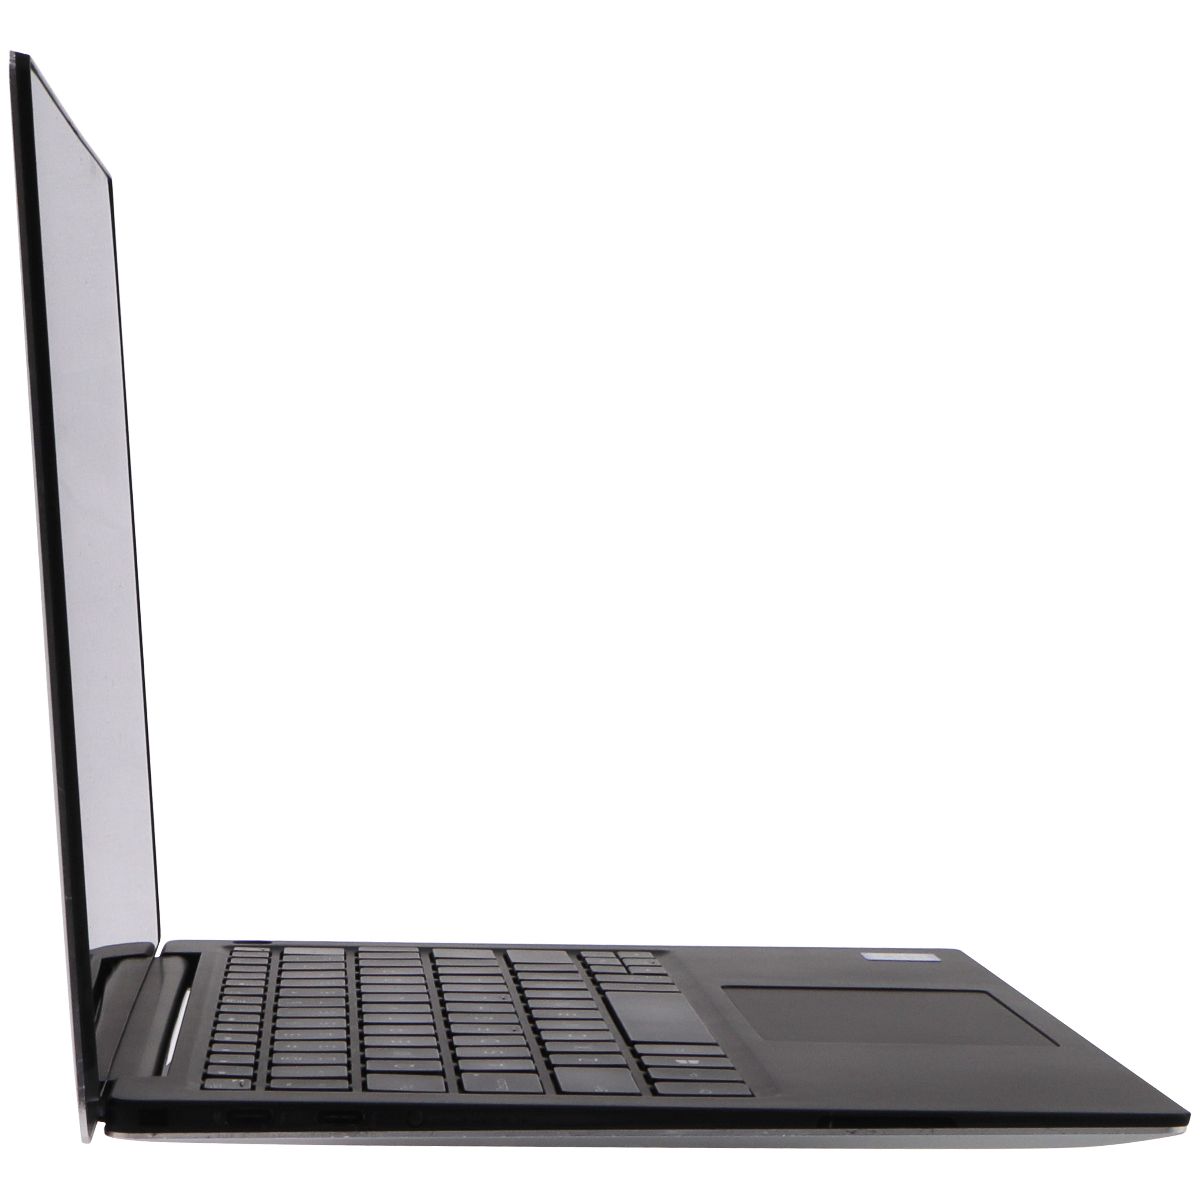 Dell XPS 13 9380 (13-in) UHD Laptop (P82G) i7-8565U/256GB SSD/16GB/ 10 Pro Laptops - PC Laptops & Netbooks Dell    - Simple Cell Bulk Wholesale Pricing - USA Seller